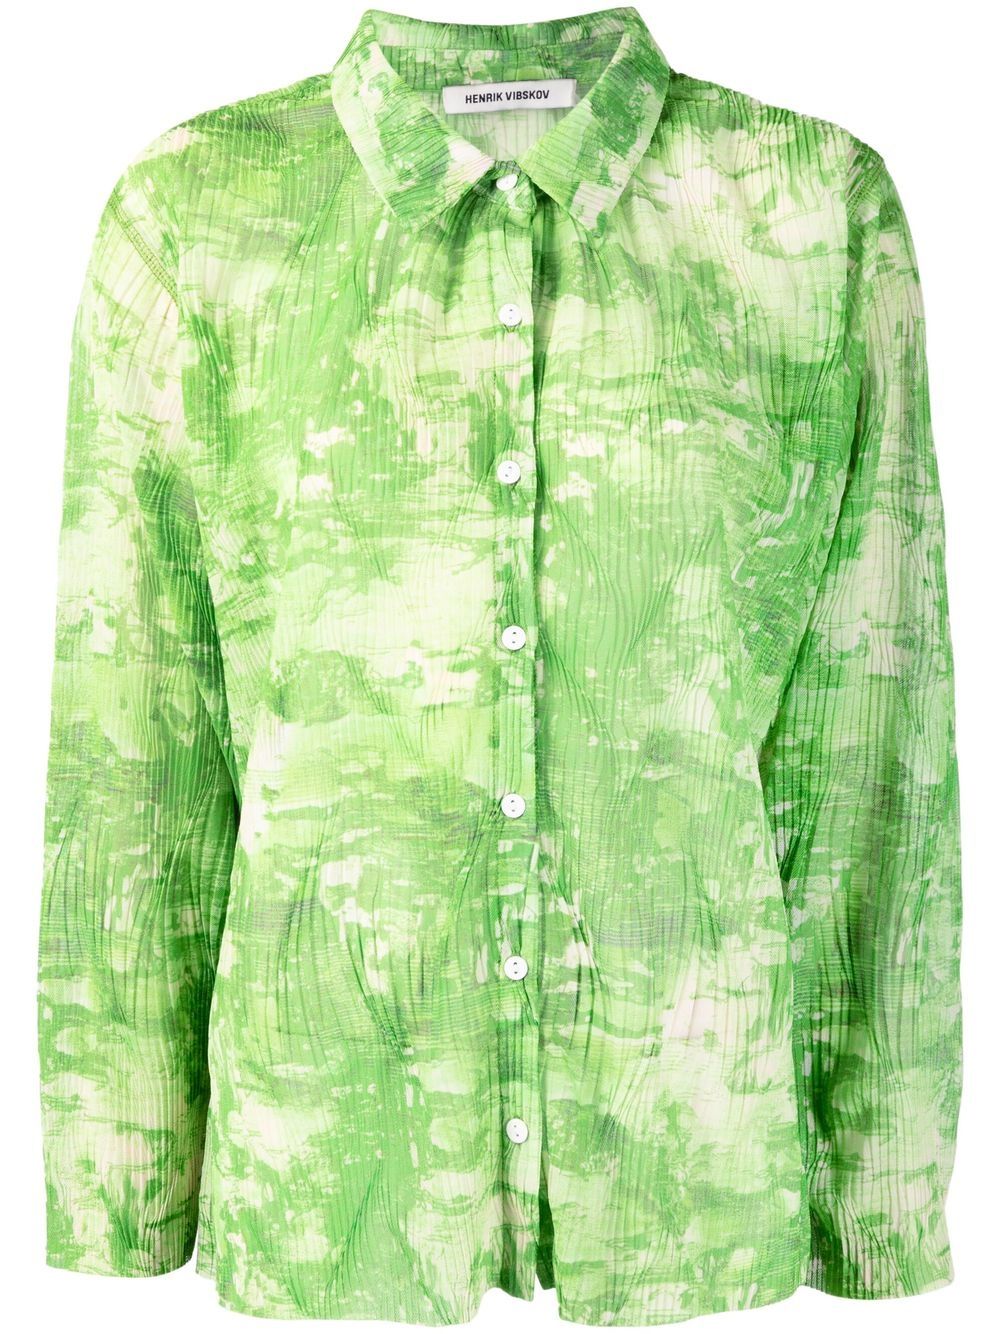 Henrik Vibskov printed plissé shirt - Green von Henrik Vibskov